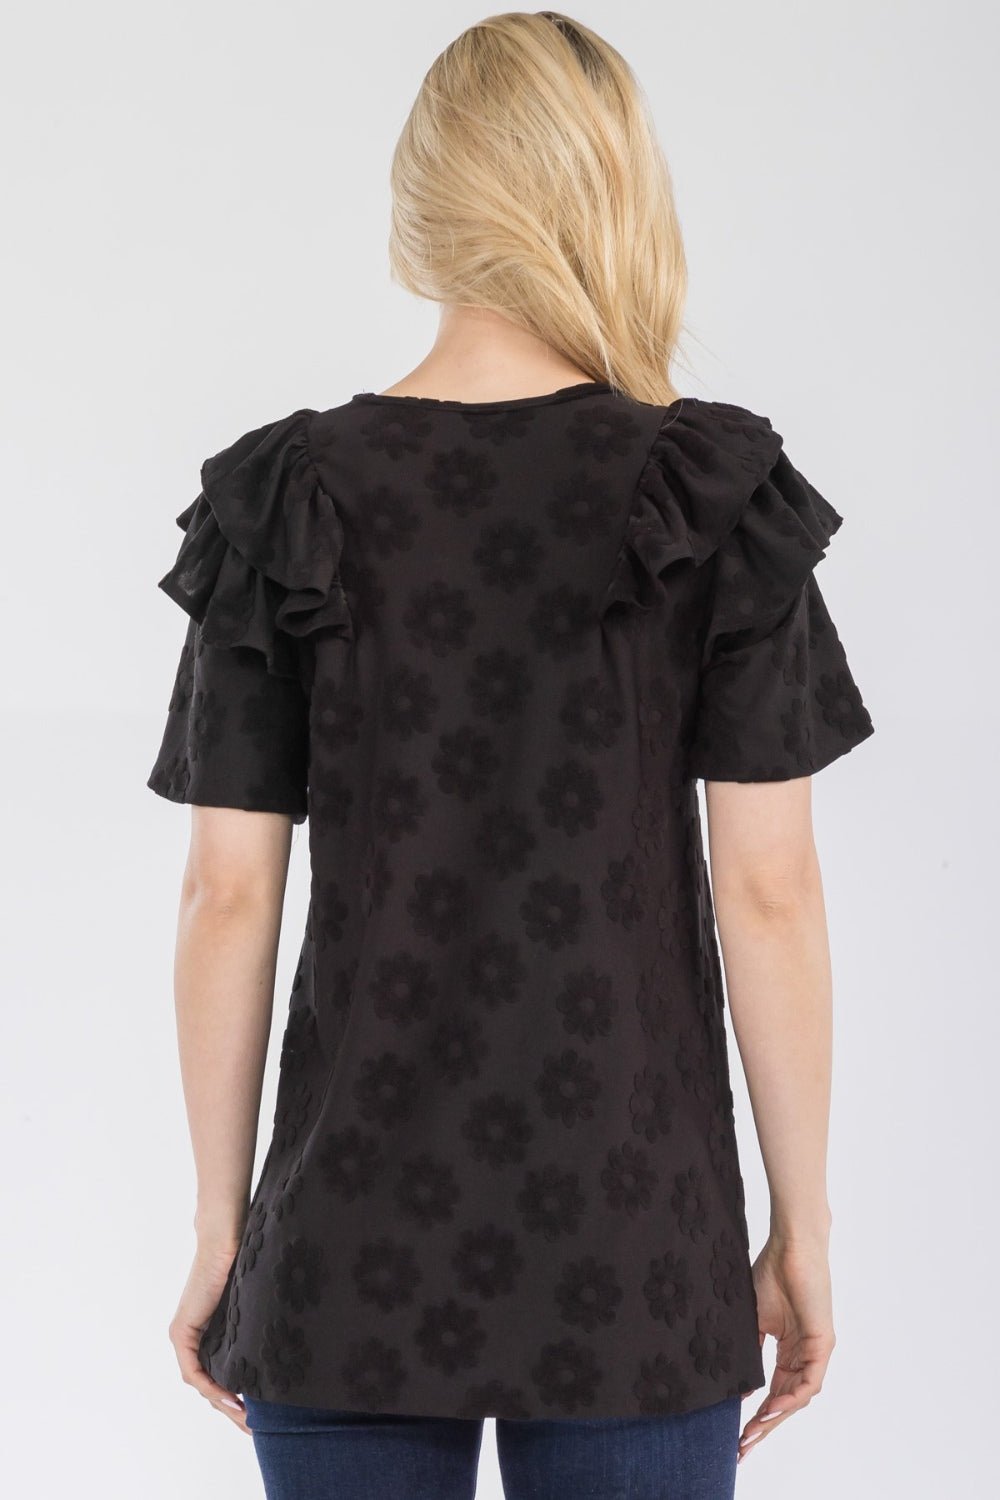 Ruffled Layered Short Sleeve Daisy Floral TopTopCeleste Design